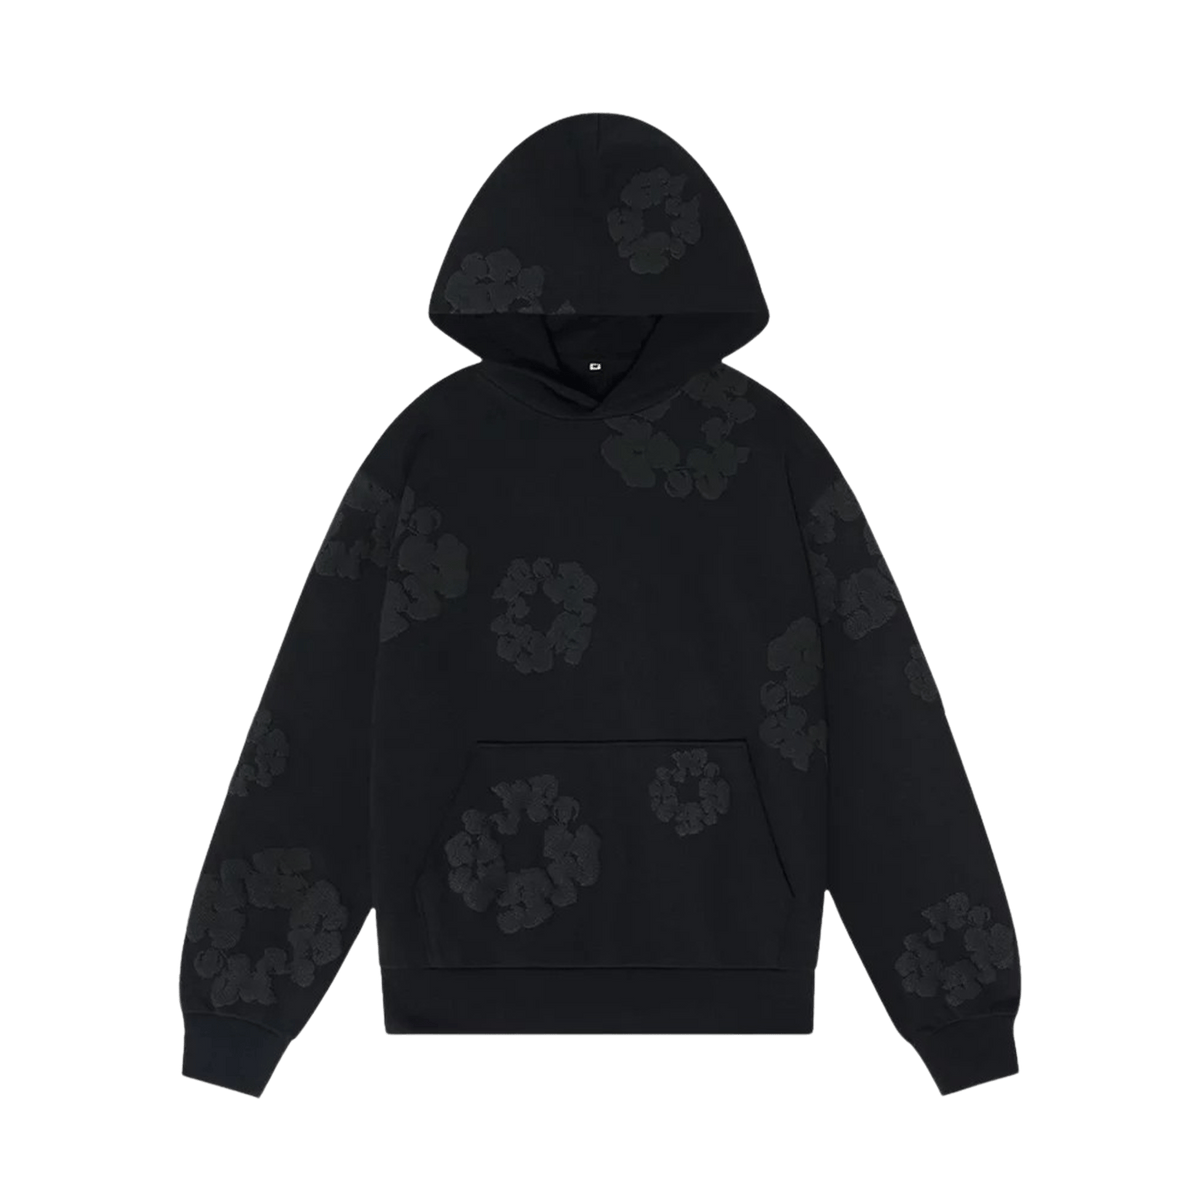 Denim Tears The Cotton Wreath Hooded Sweatshirt 'Black Monochrome' - Kick Game